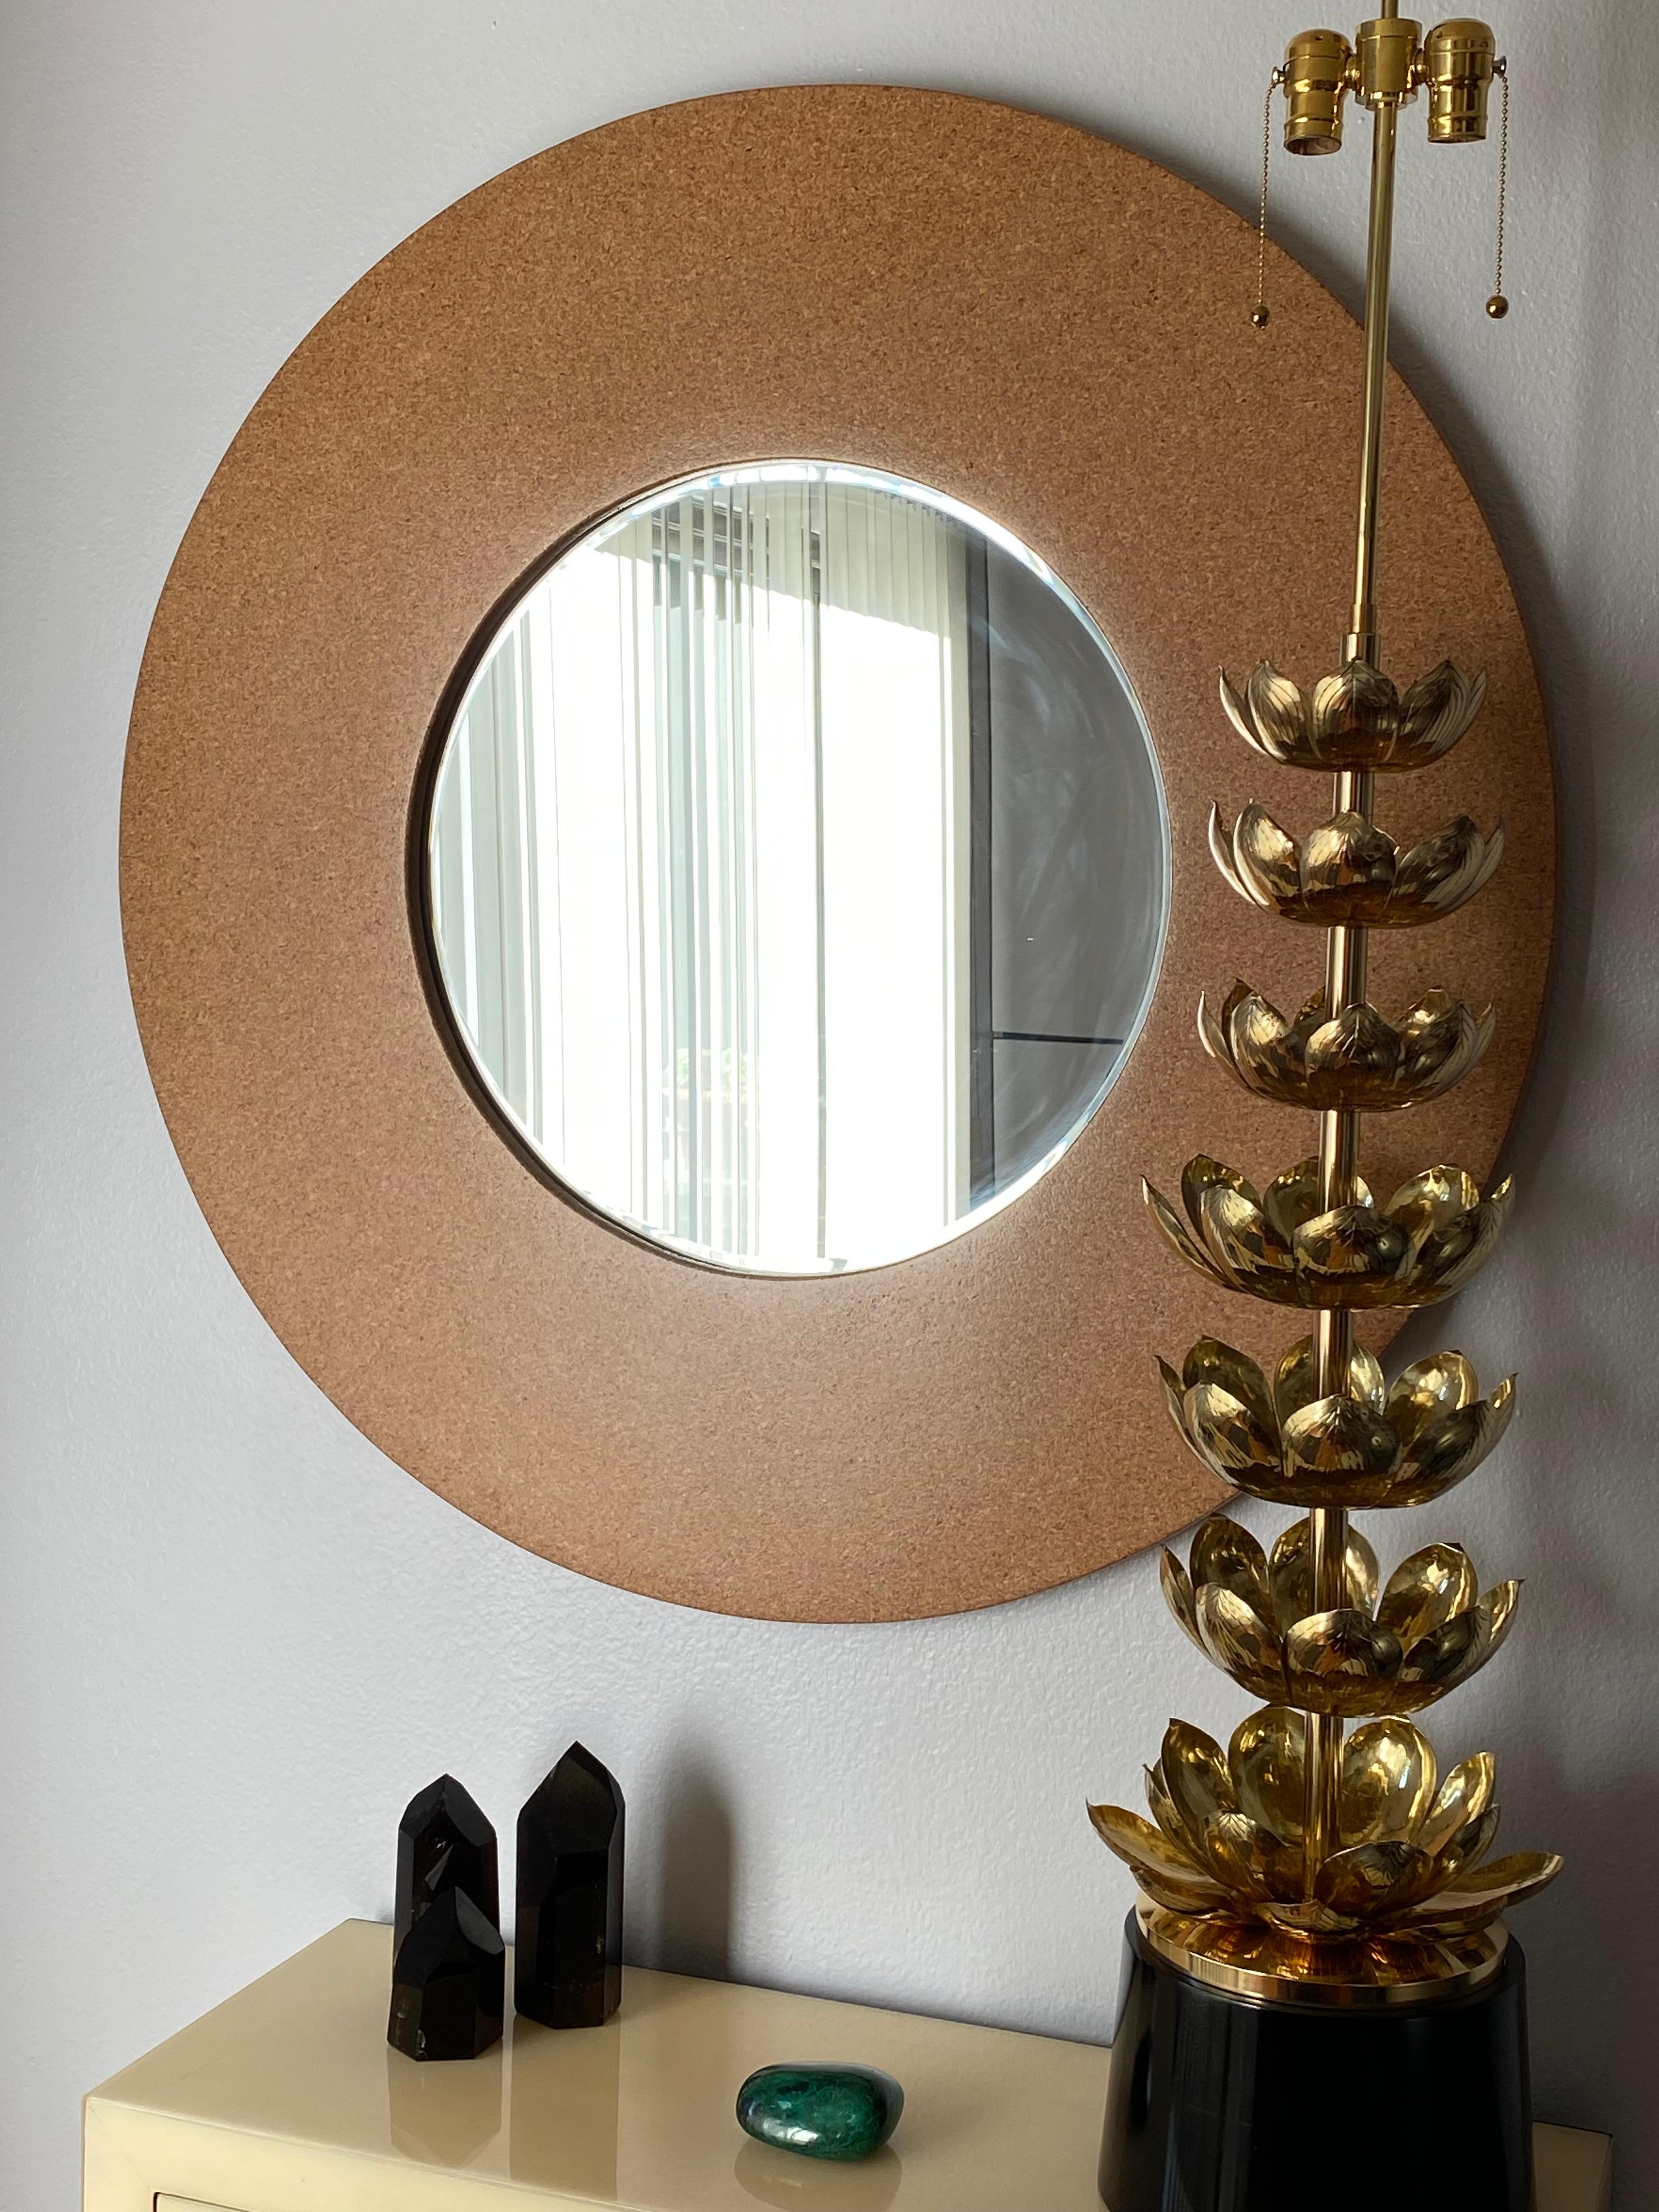 Mid-Century Modern style round cork wall mirror. Only mirror is 21.5